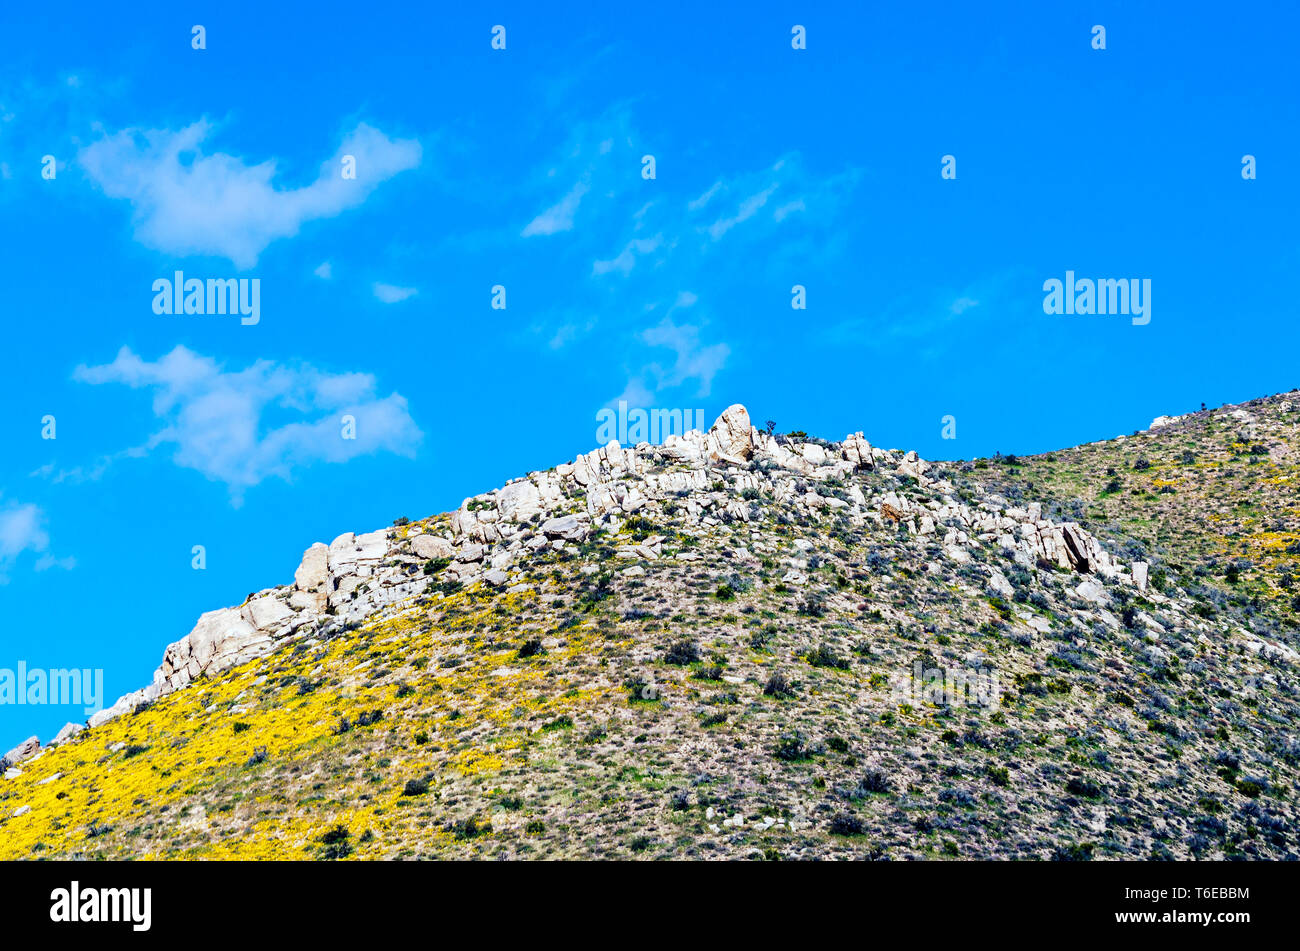 Mountain peak with springtime yellow wildflowers and white rocky peak under bright blue sky. Stock Photo